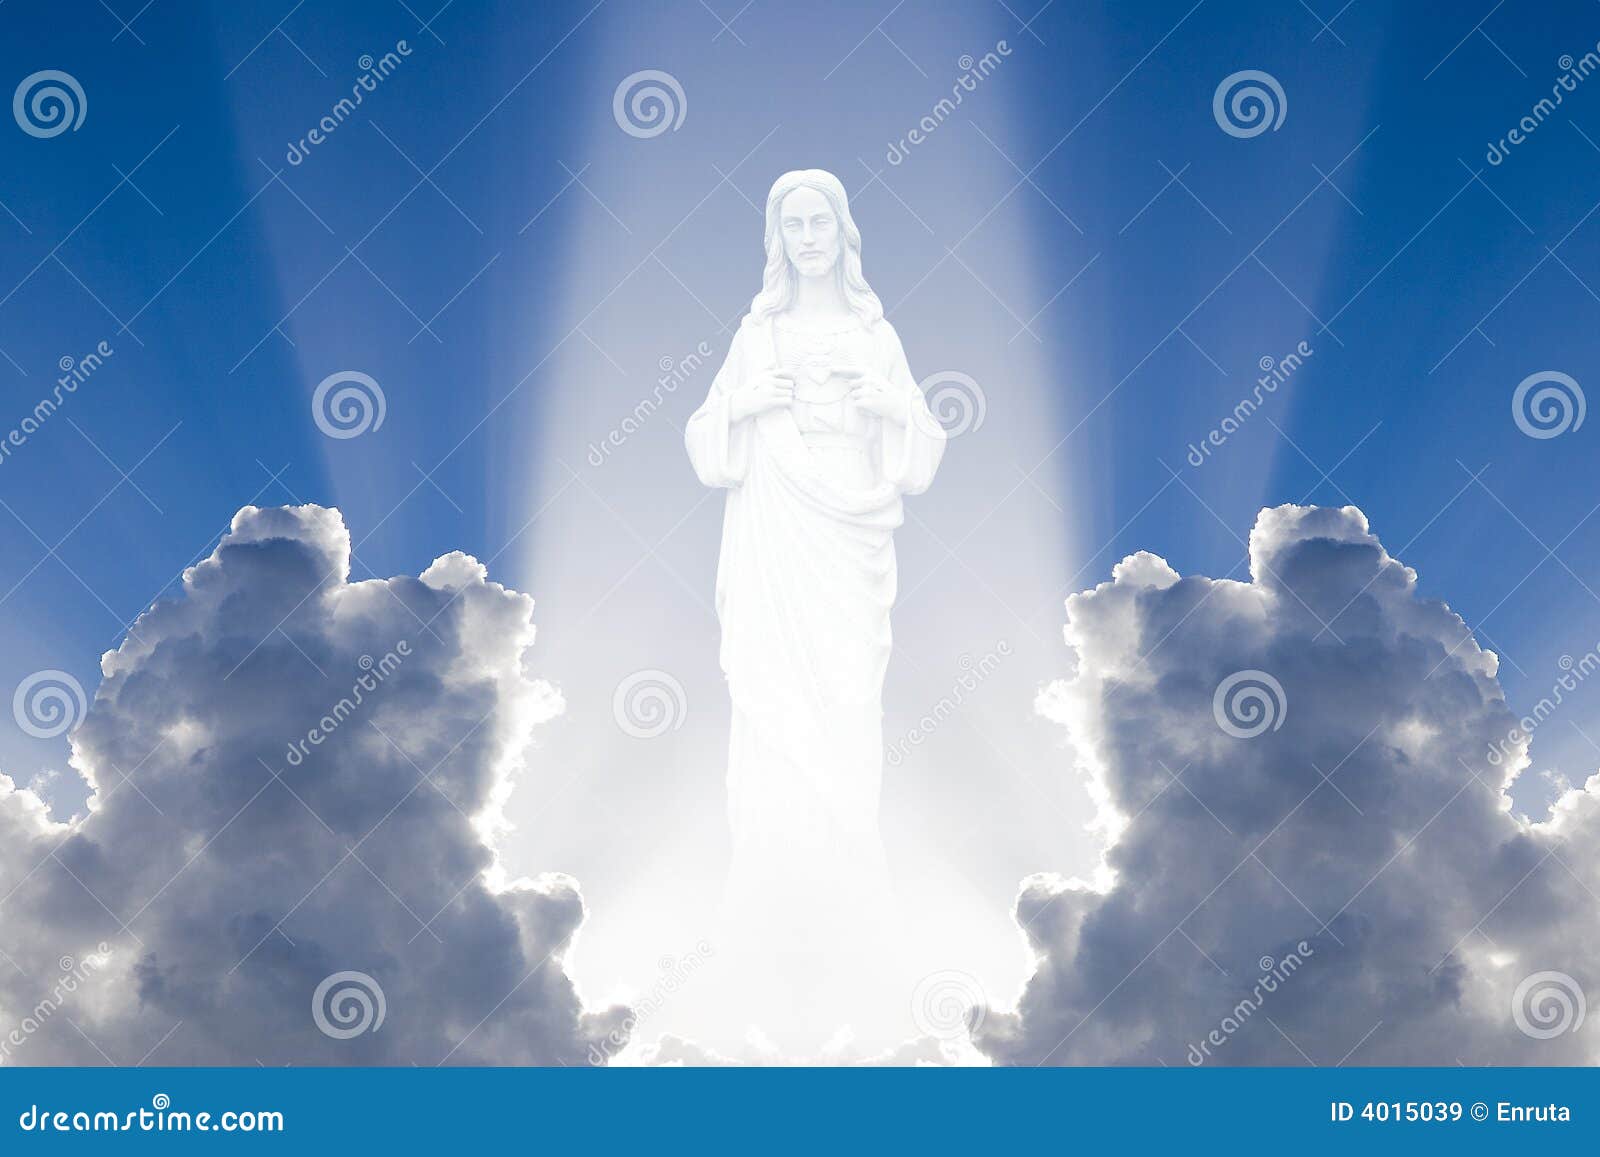 Jesus in the heaven stock illustration. Illustration of holy - 4015039